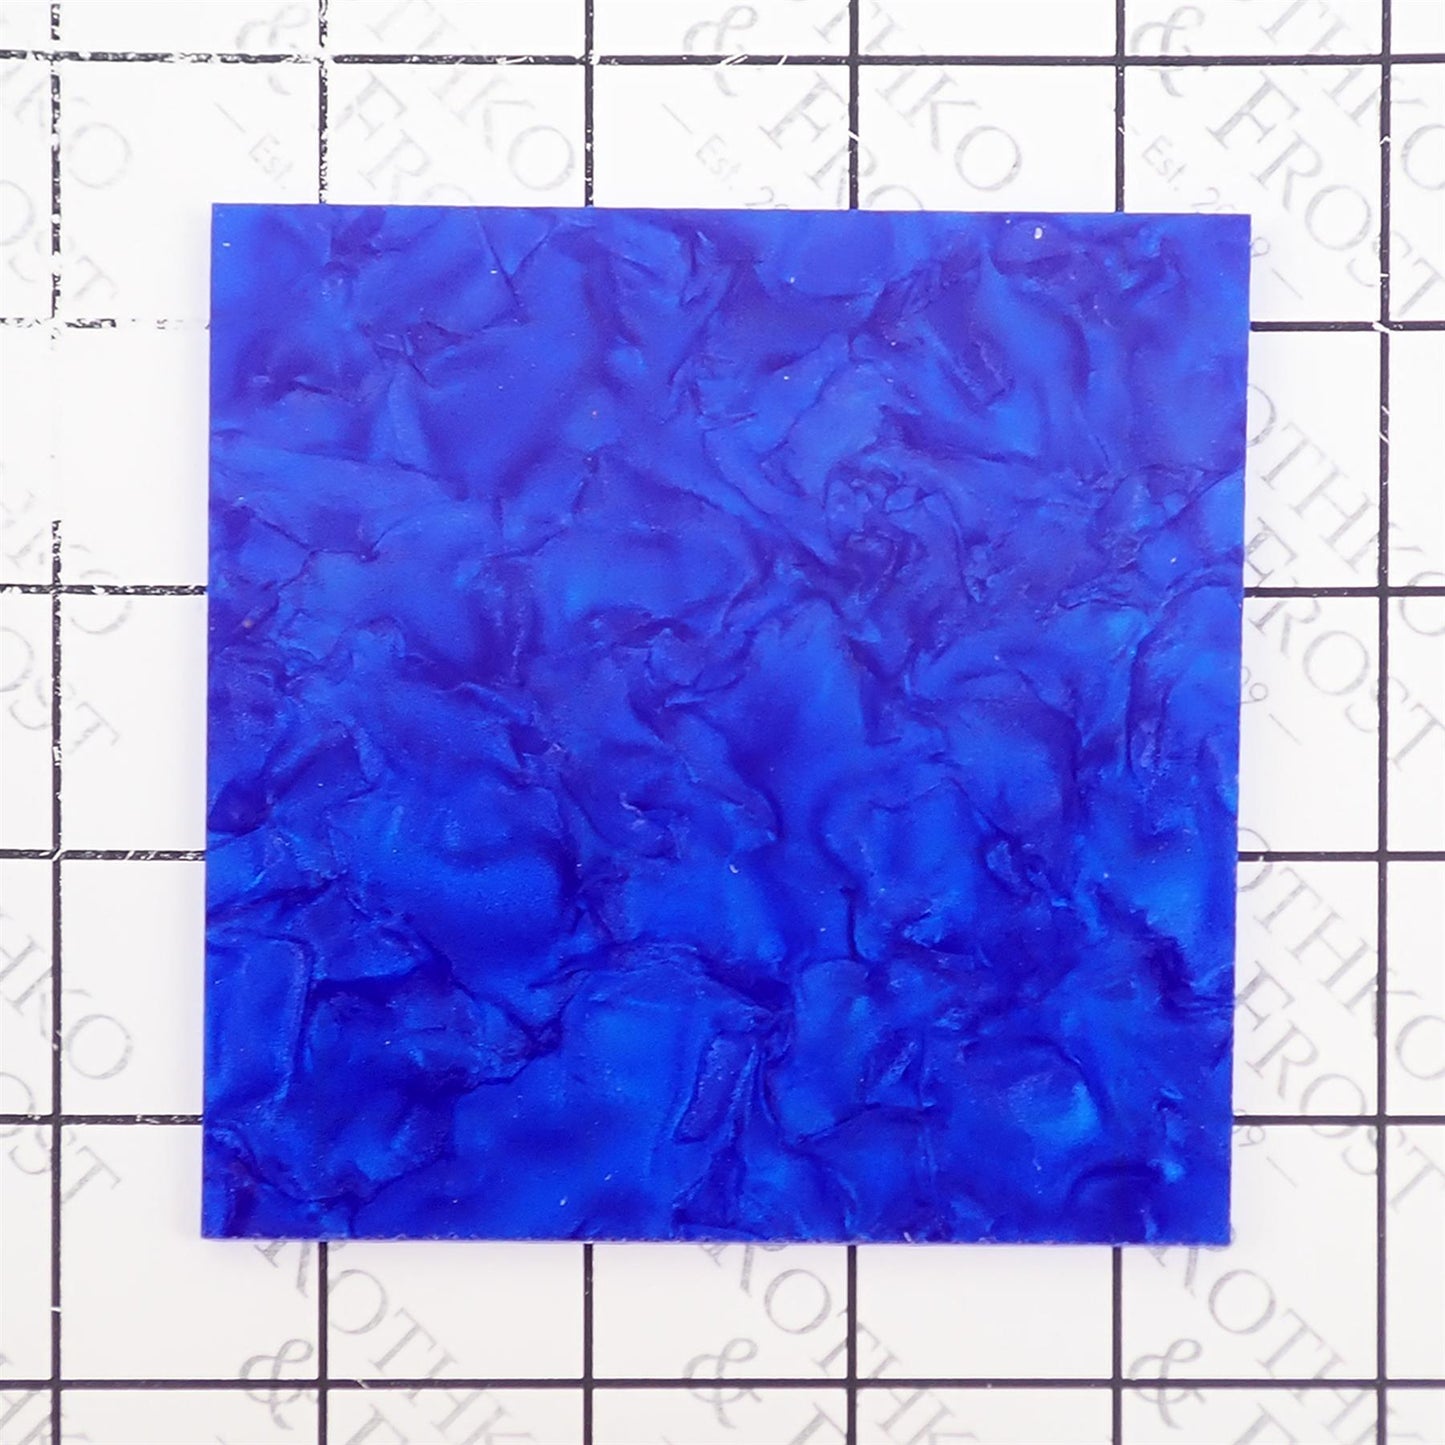 Incudo Blue Pearloid Acrylic Sheet - 300x200x3mm (11.8x7.87x0.12")